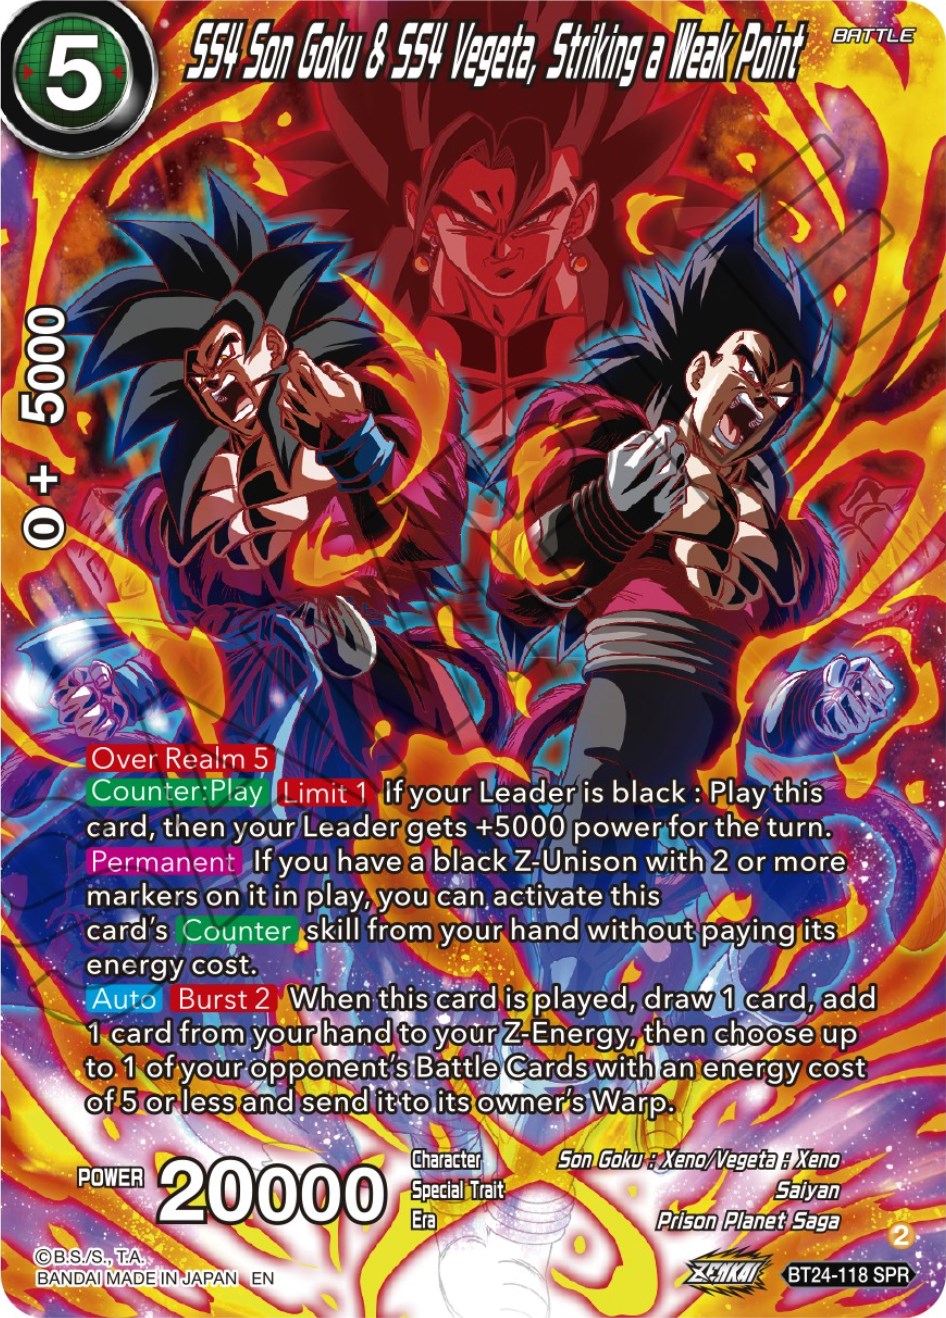 SS4 Son Goku & SS4 Vegeta, Striking a Weak Point (SPR) (BT24-118) [Beyond Generations] | Black Swamp Games